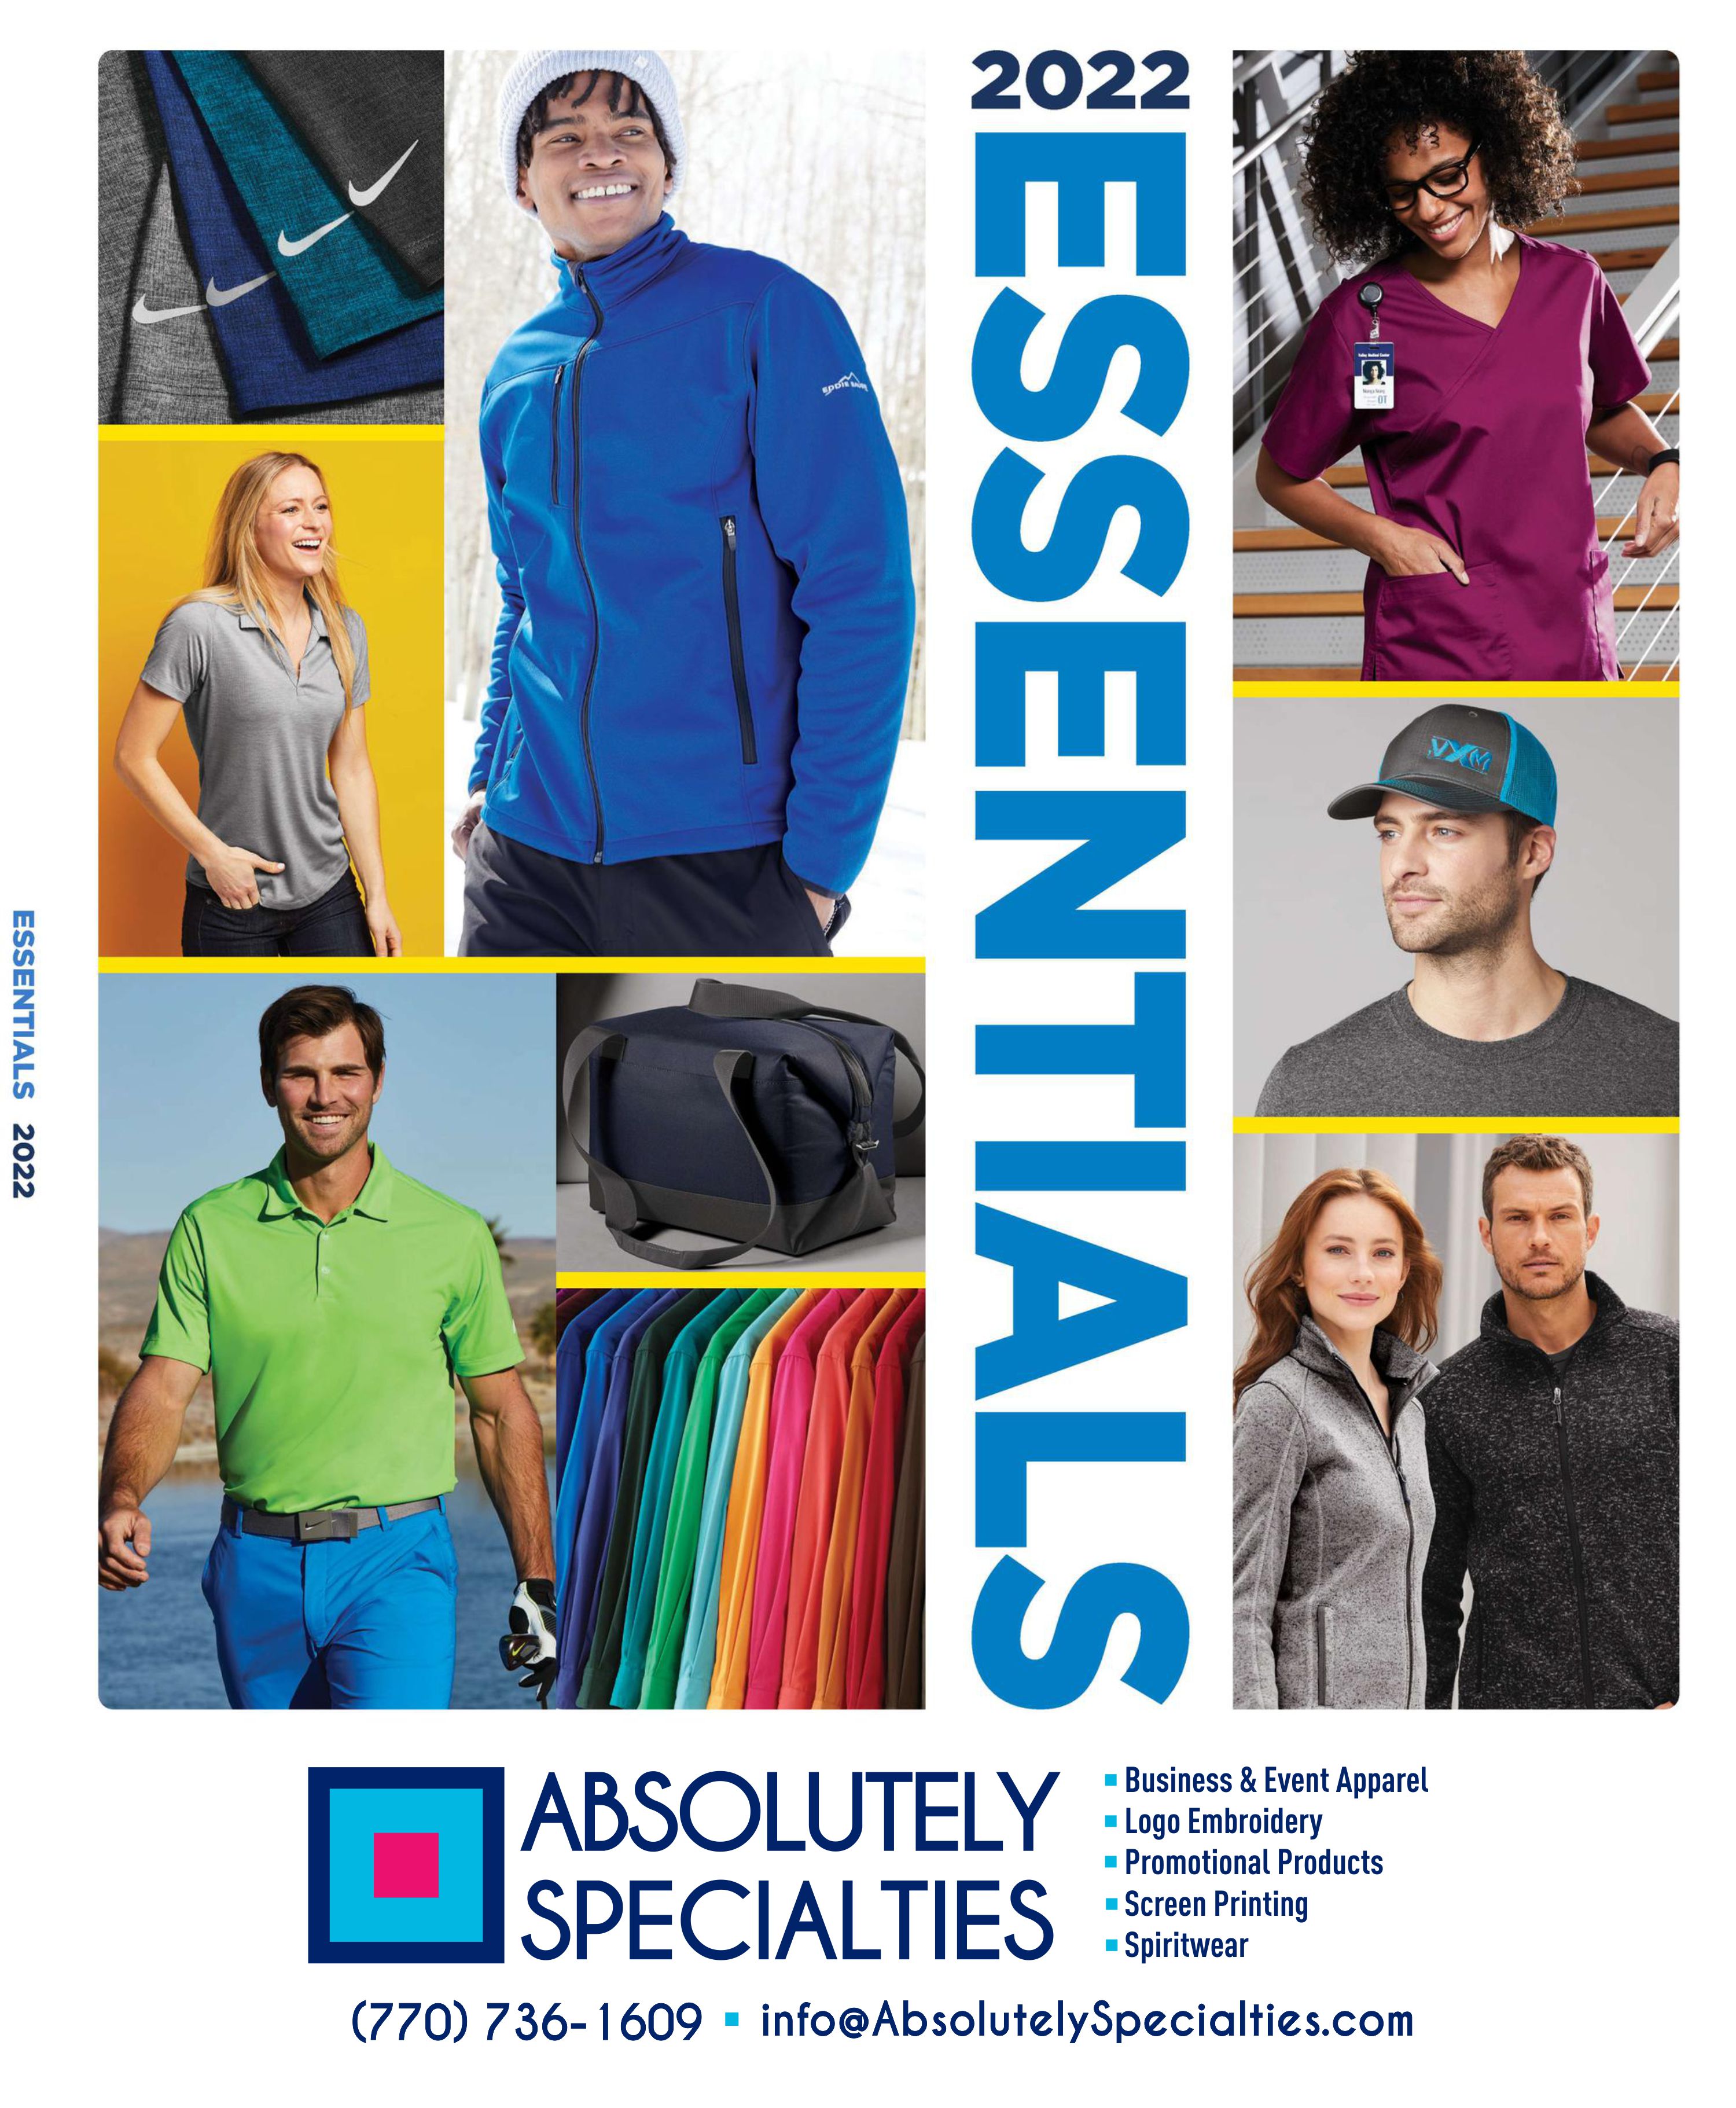 Absolutely Specialties - Essentials Catalog - 2022